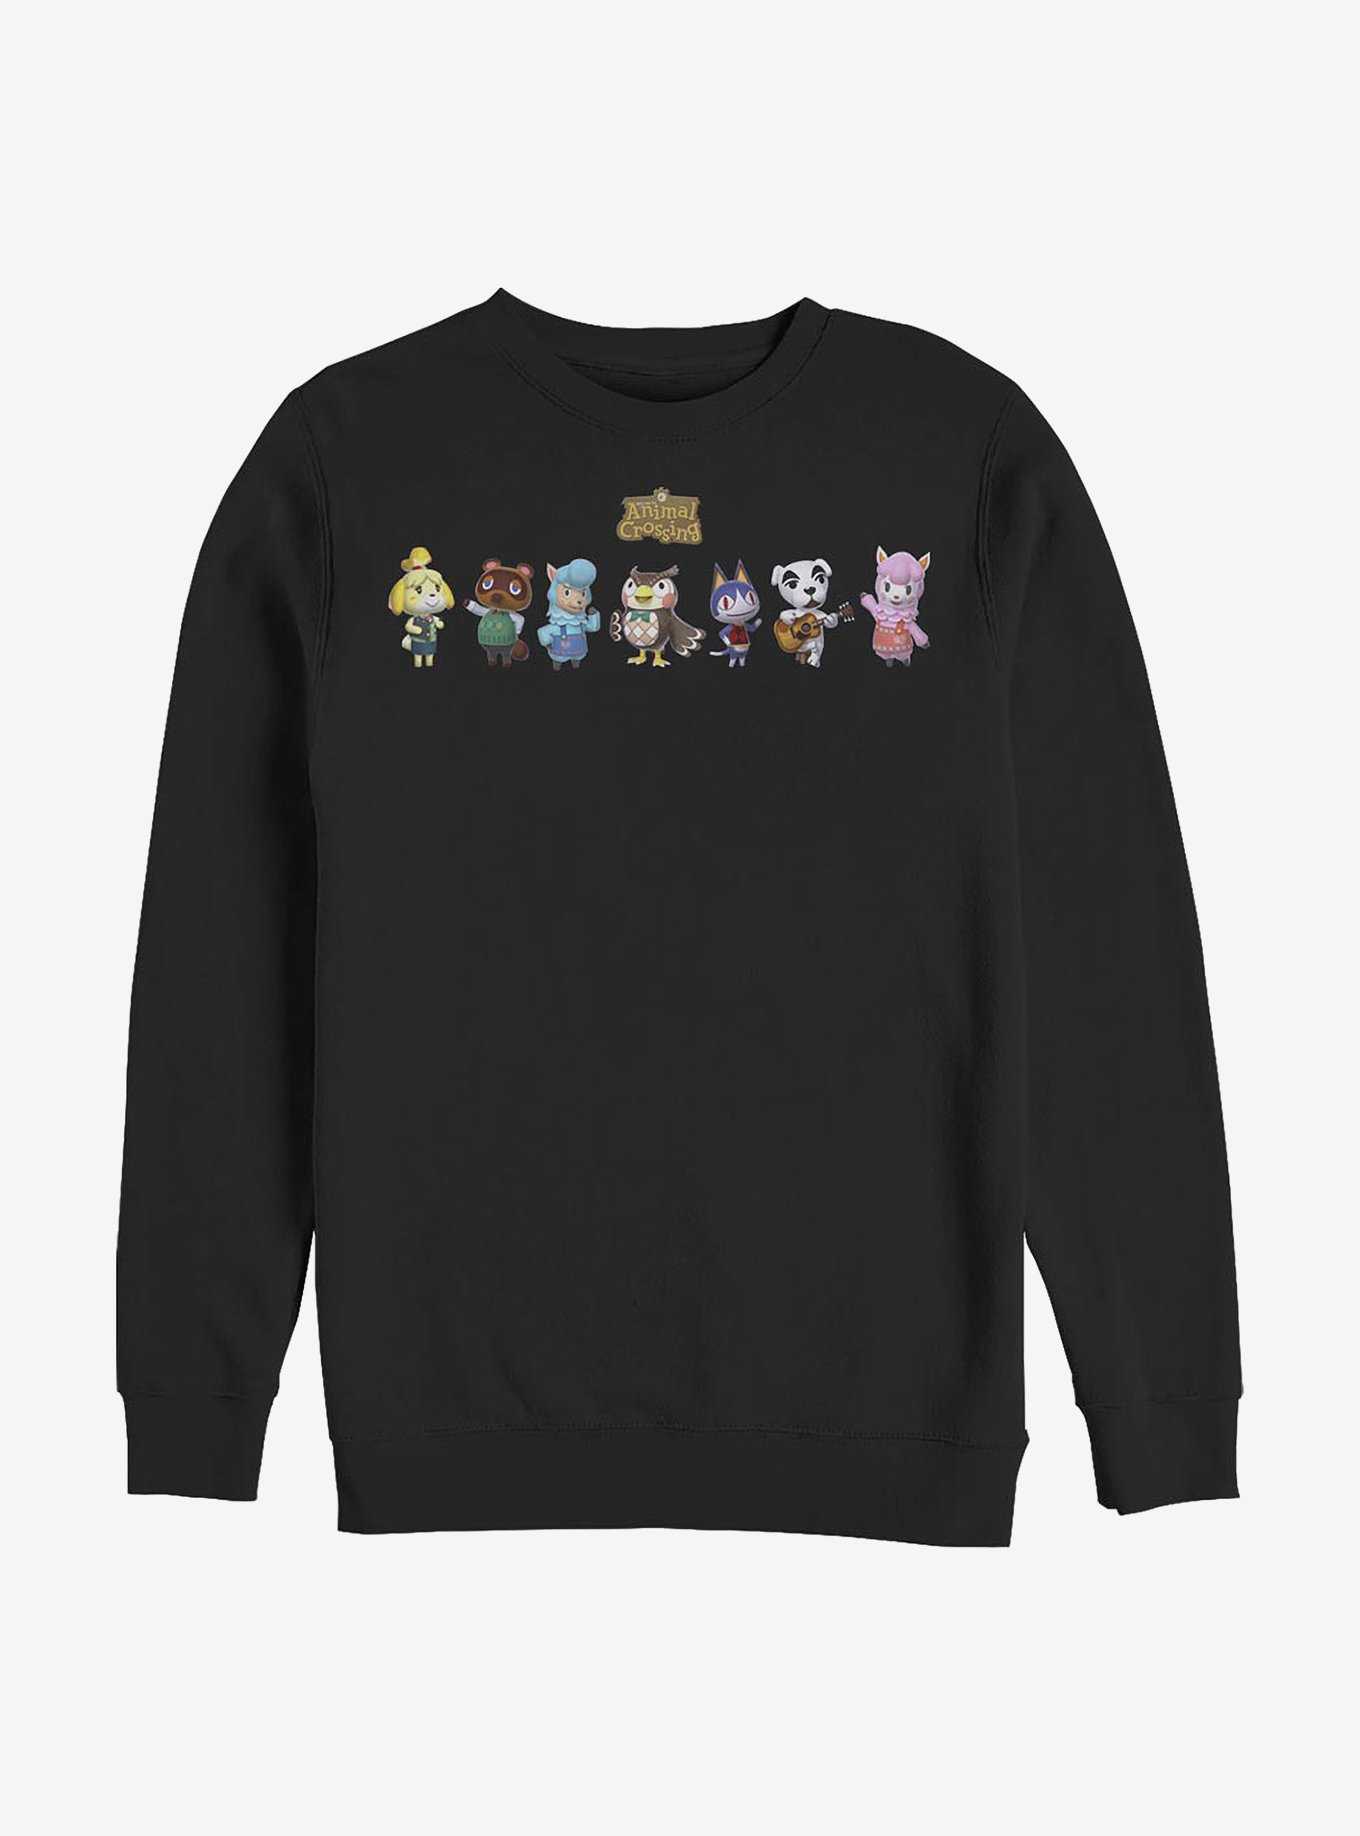 Nintendo Animal Crossing Main Players Crew Sweatshirt, , hi-res